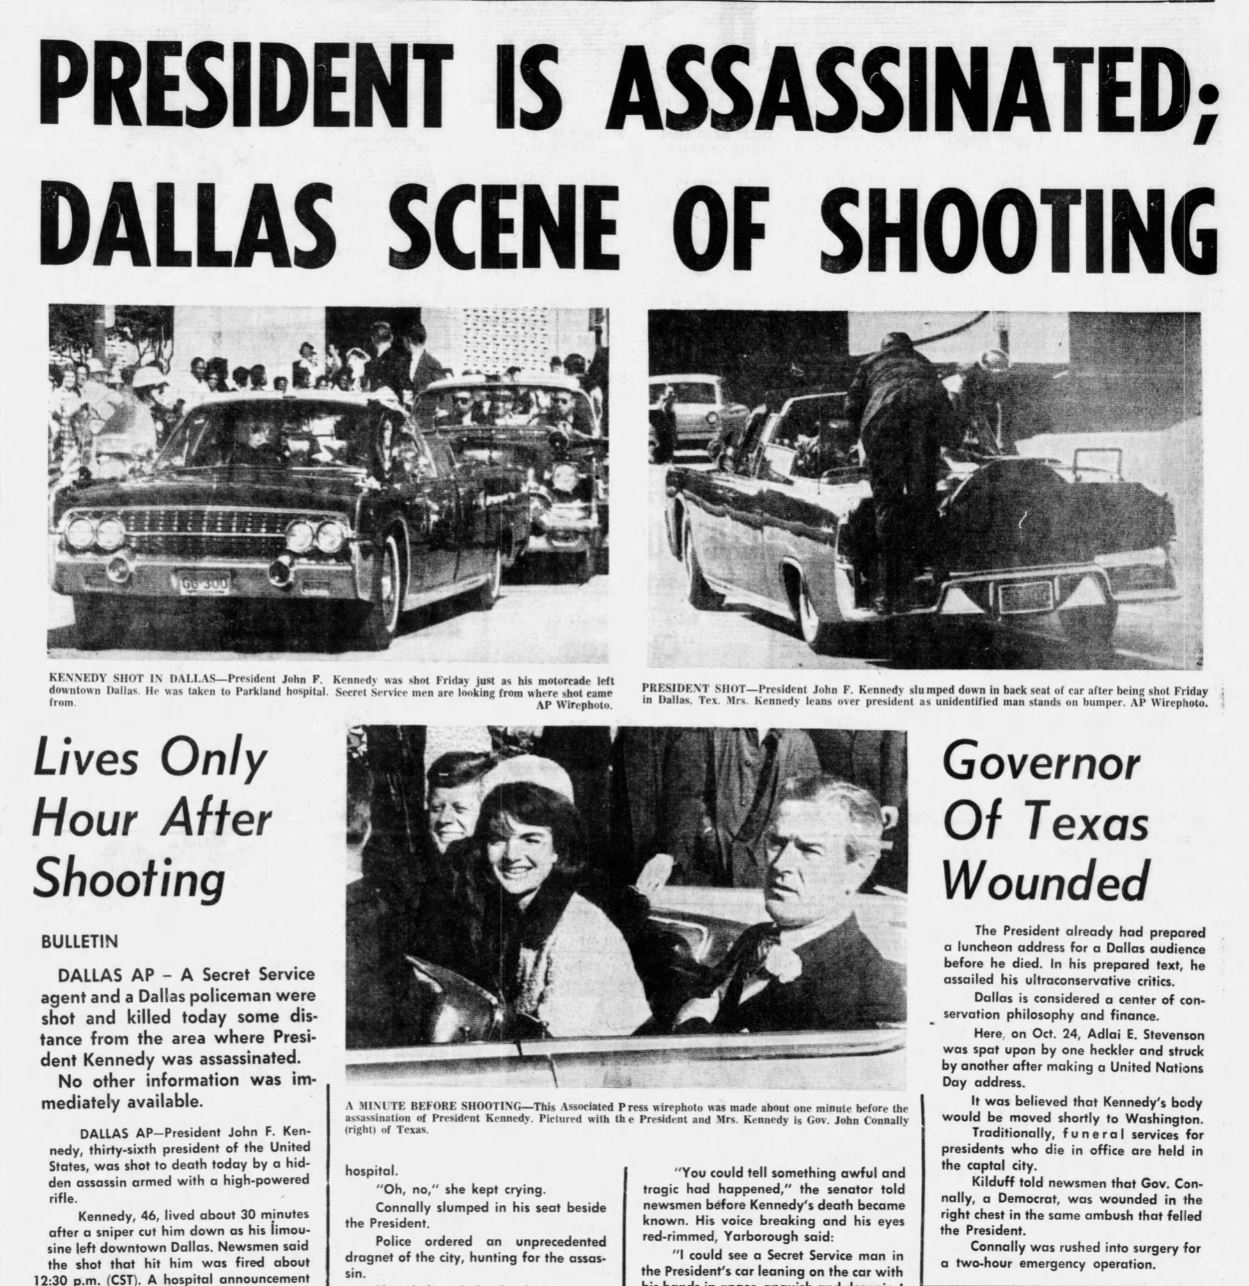 Newspaper coverage of the assassination of President John F. Kennedy (Terre Haute Tribune, via Newspapers.com)